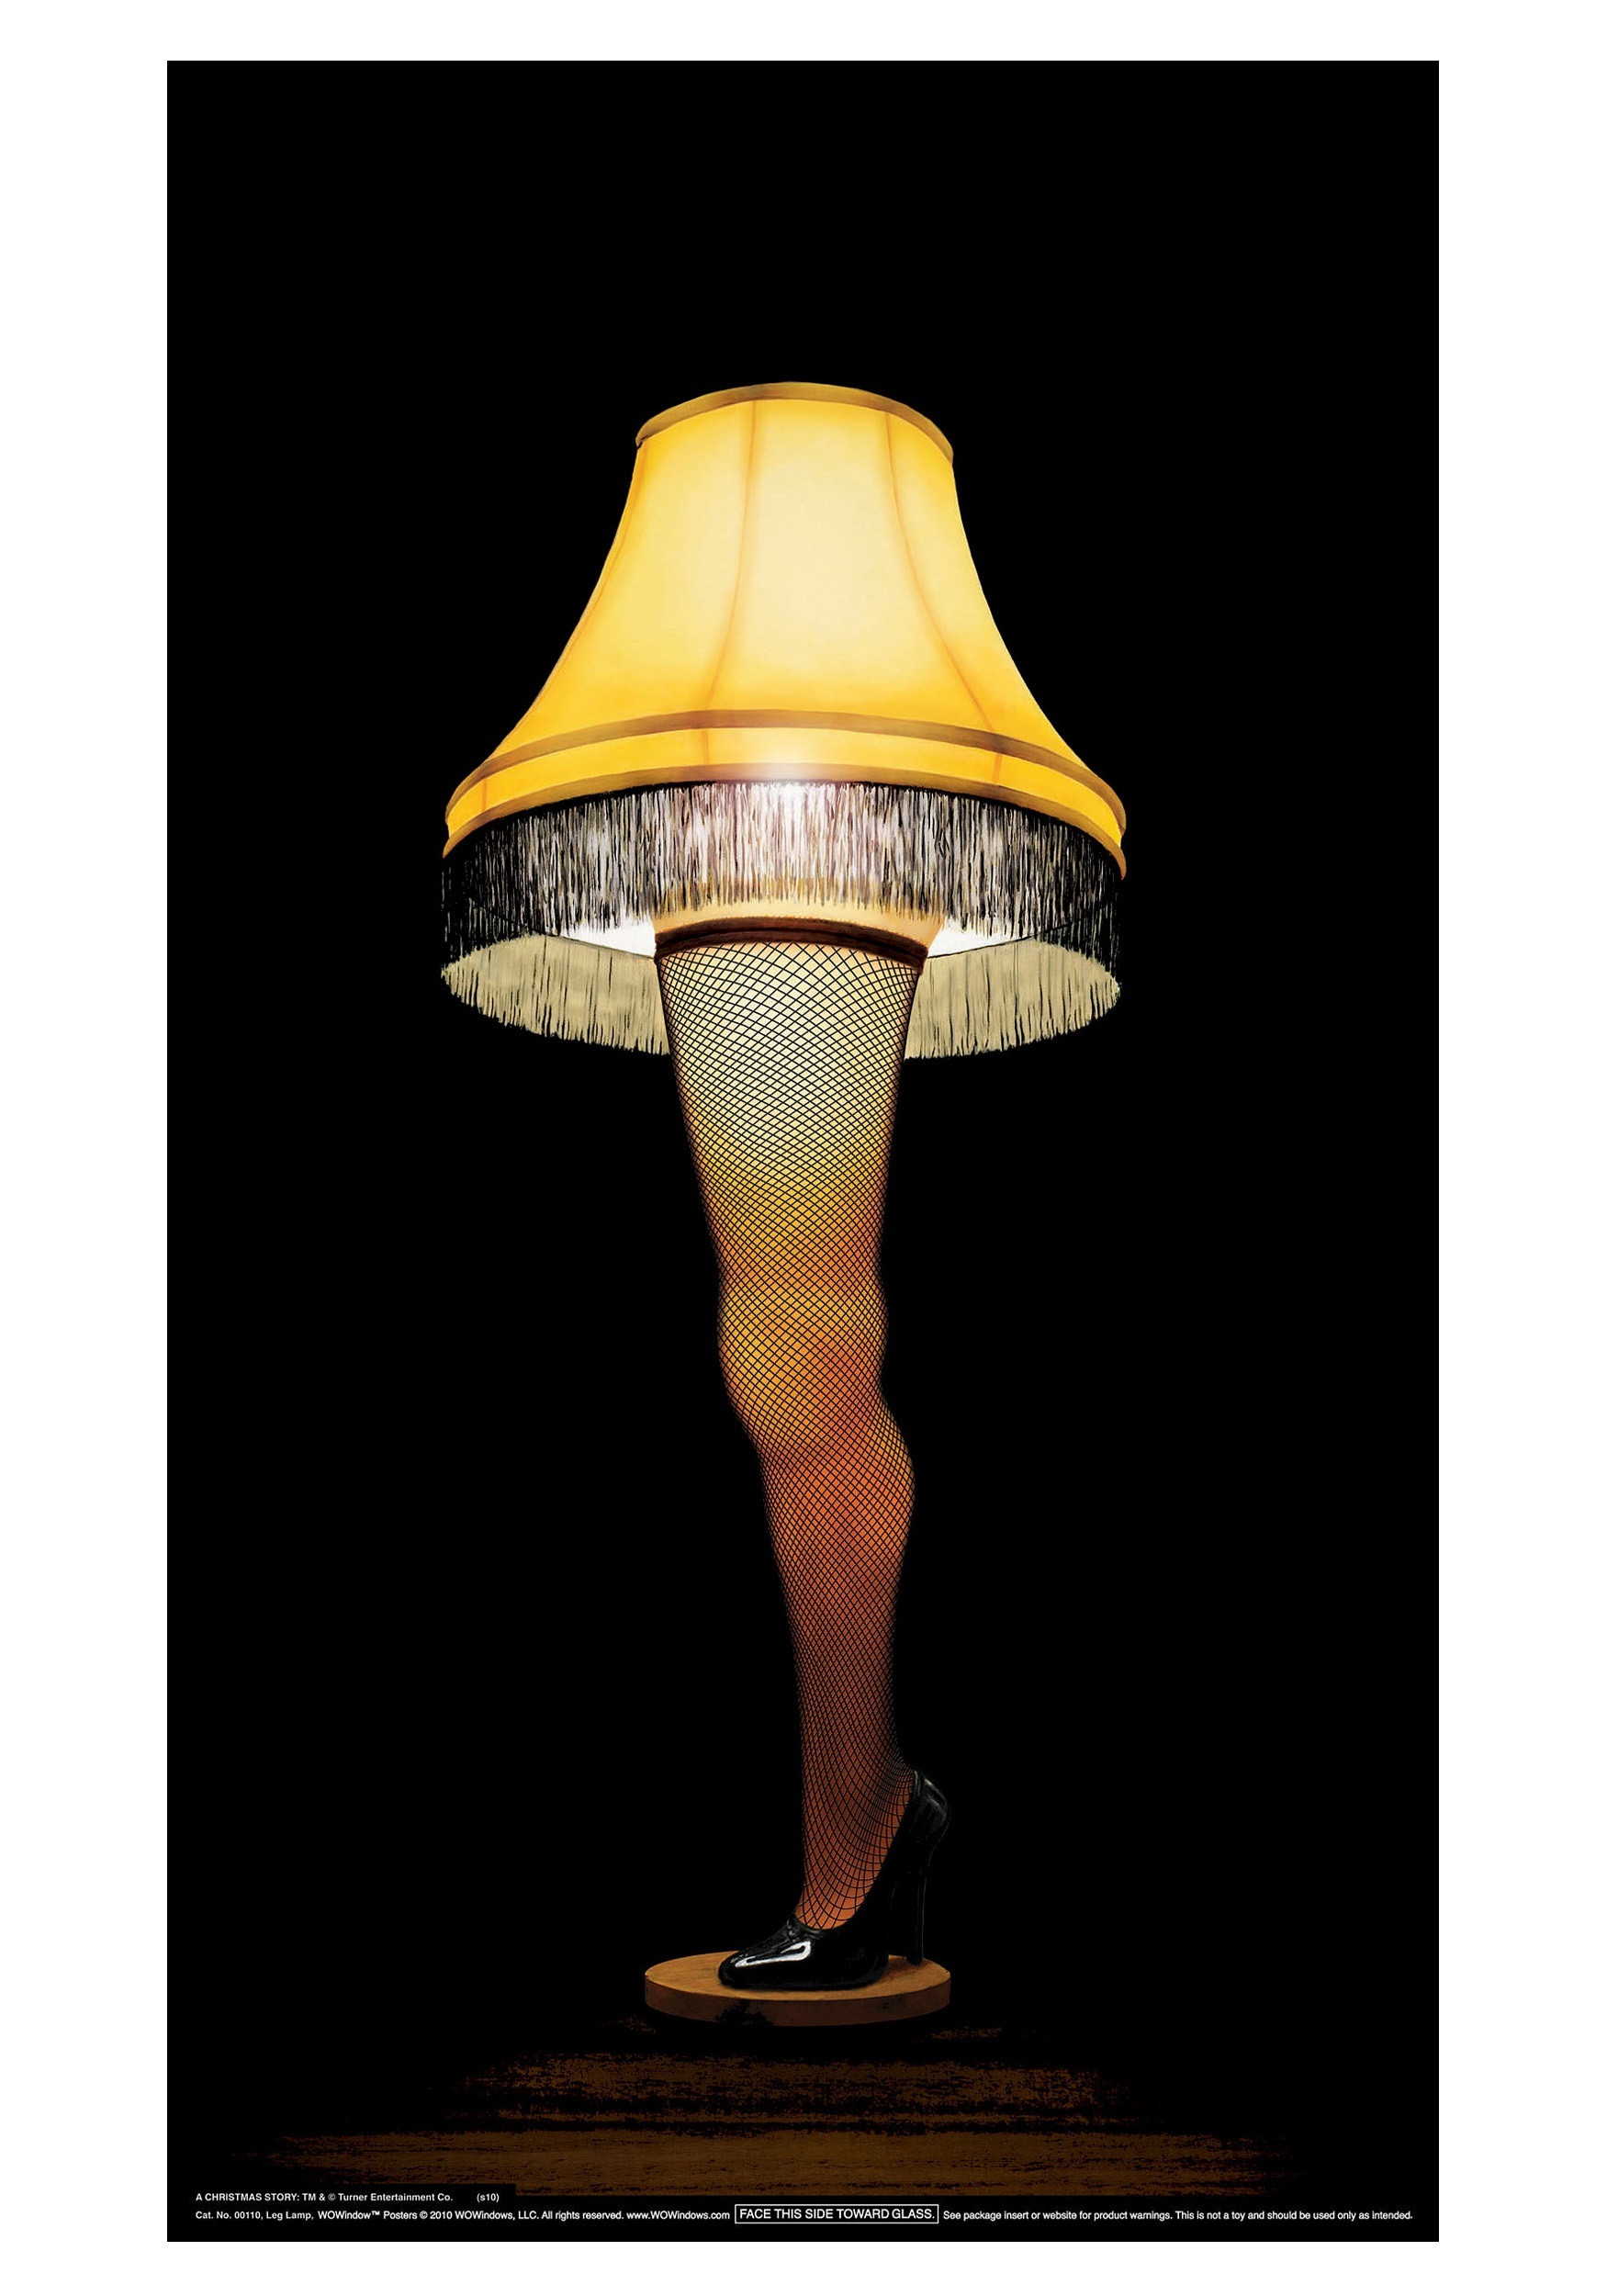 Christmas Story Lamp Full Size
 Leg Lamp Window Cling